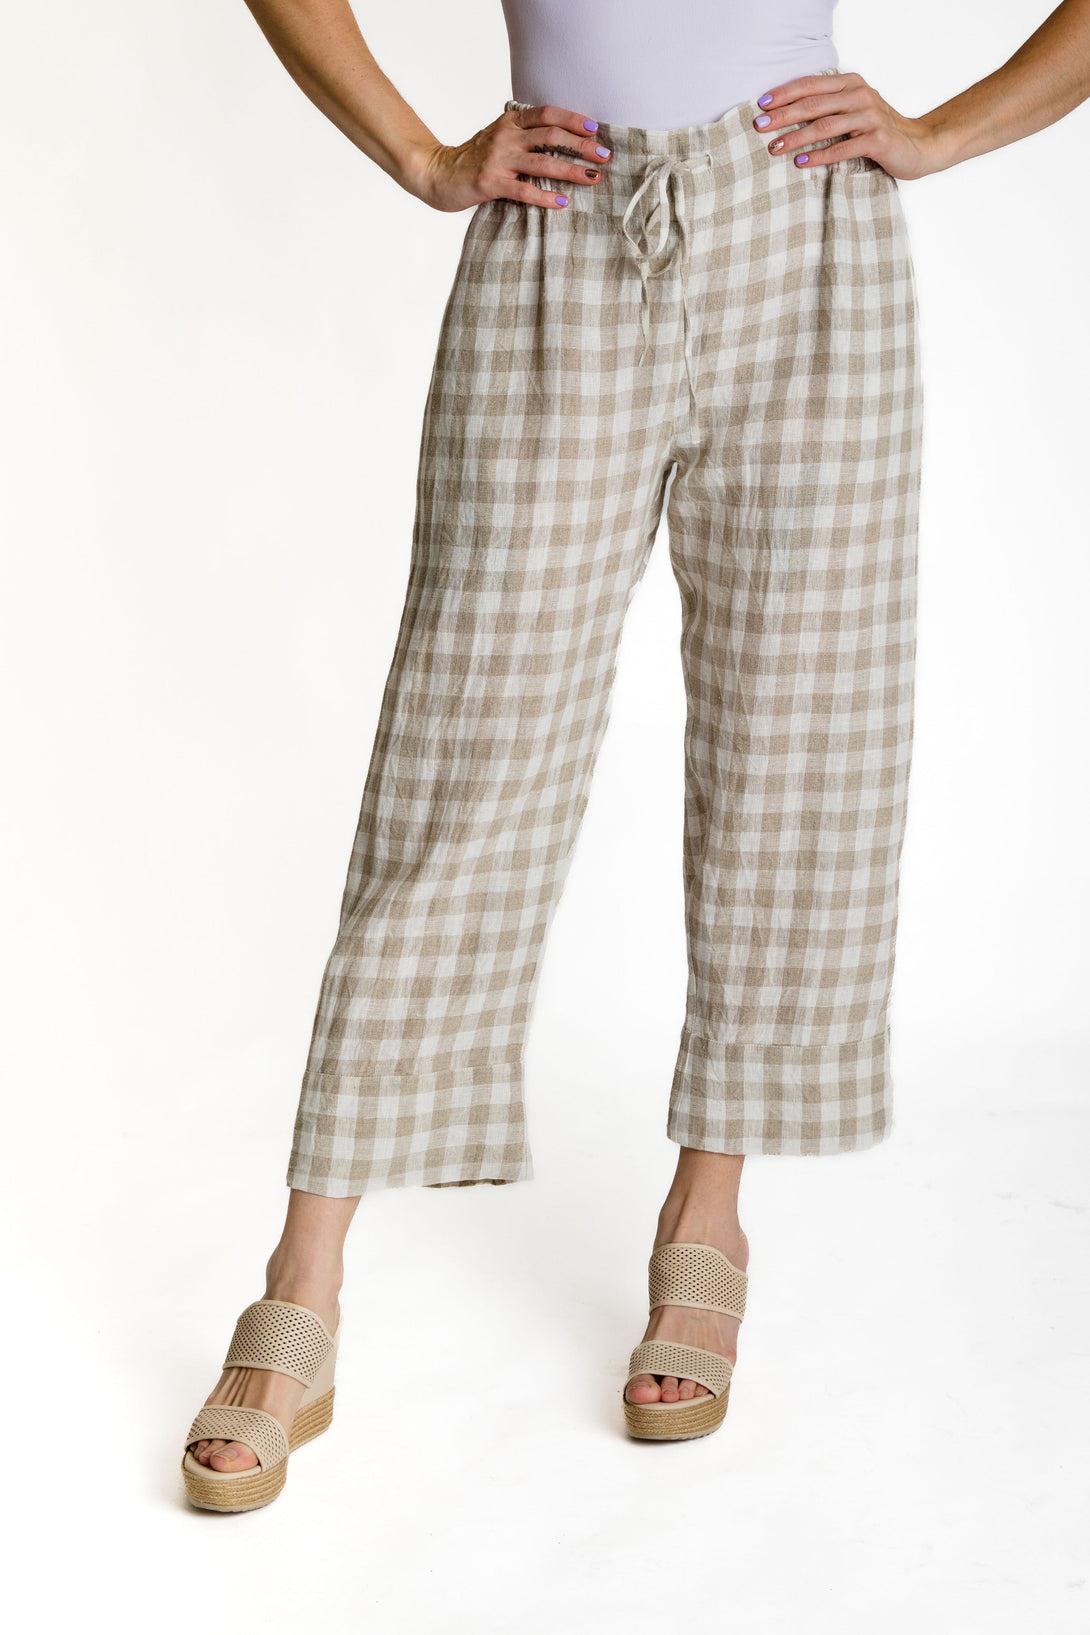 Perrine Pants in Latte - Imagine Fashion